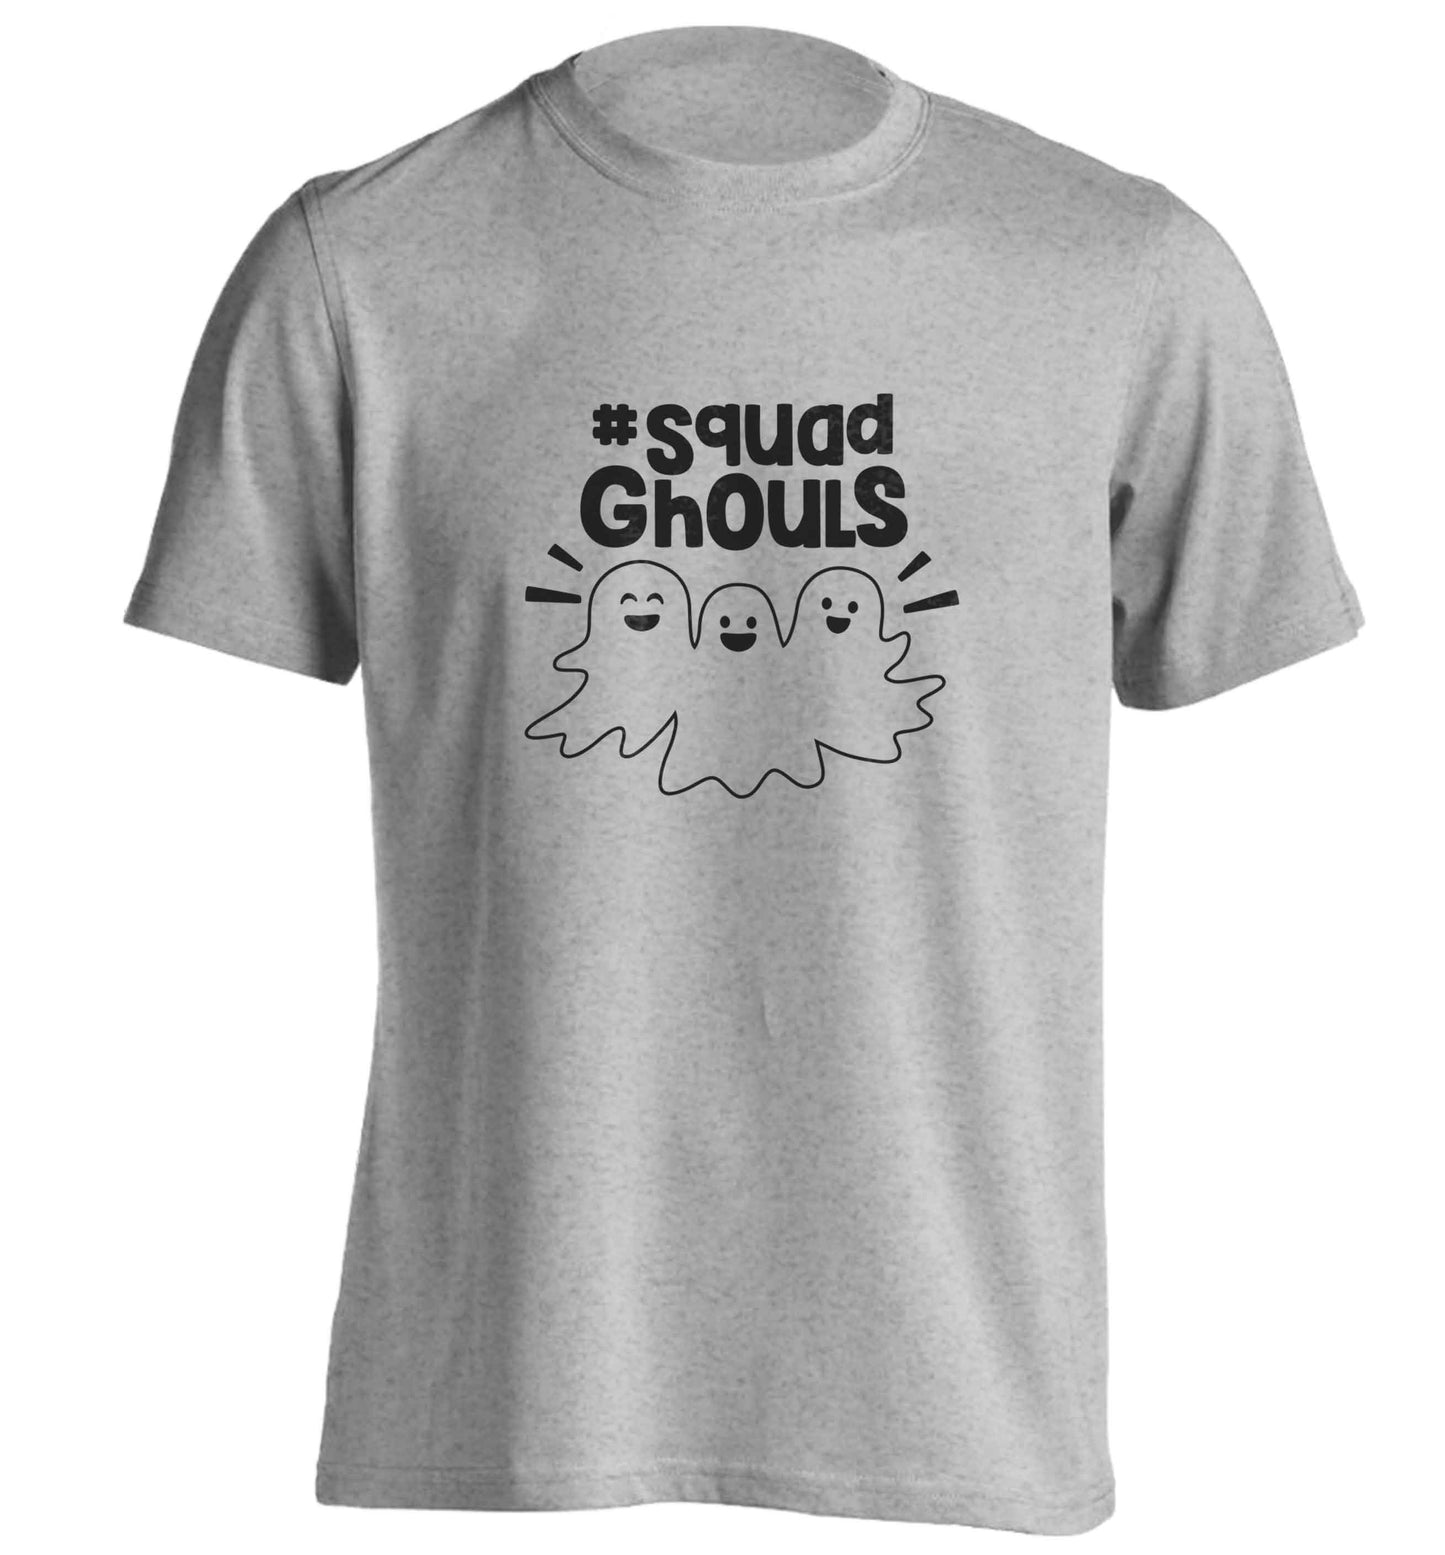 Squad ghouls Kit adults unisex grey Tshirt 2XL